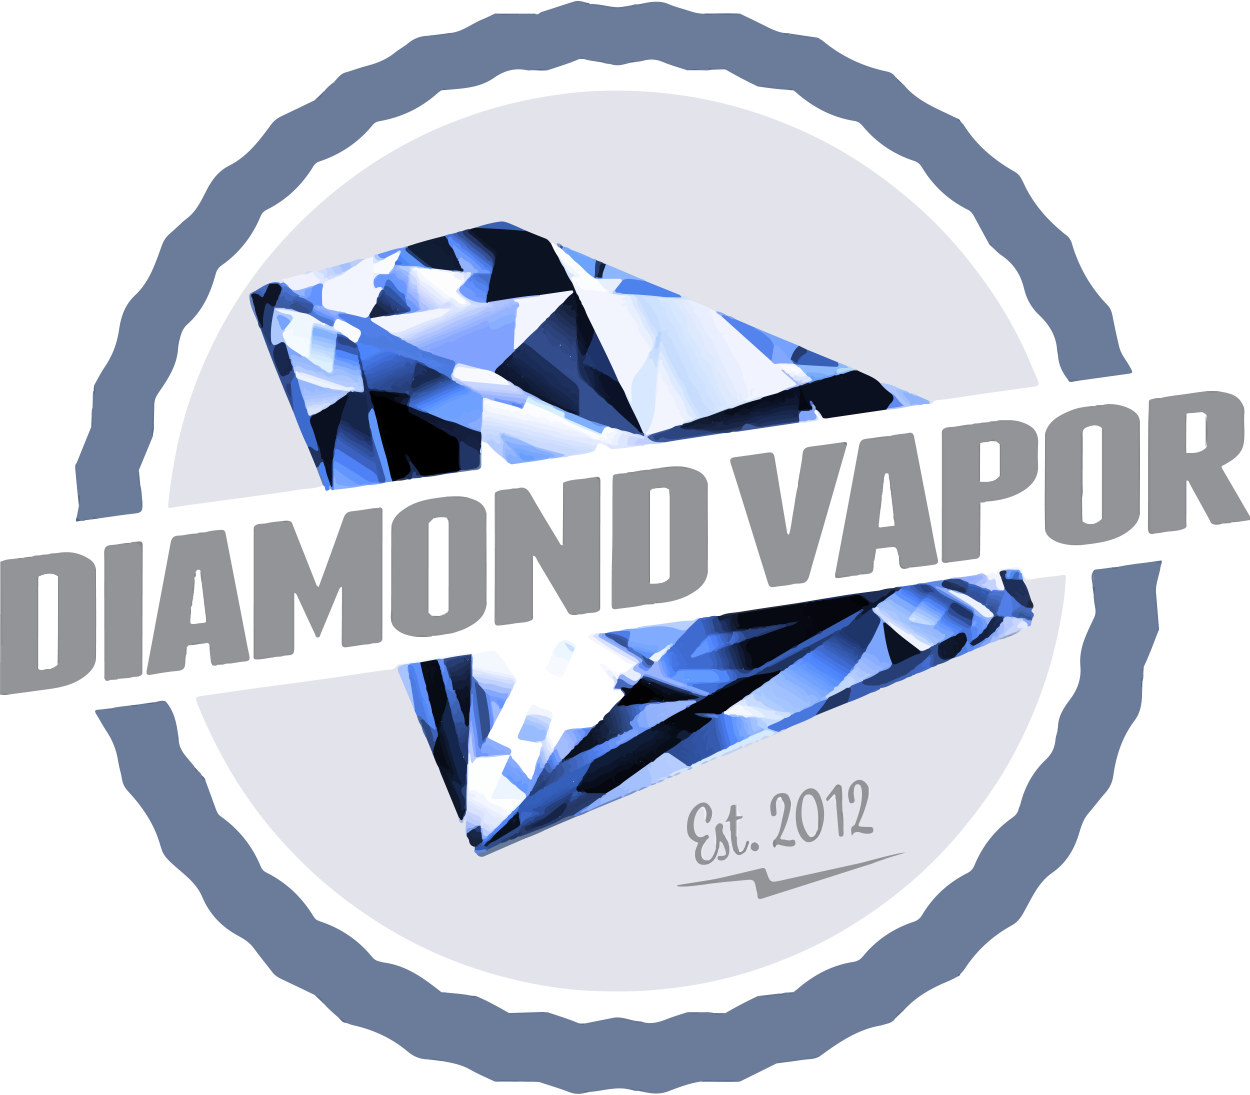 Thank you Diamond Vapor for renewing your VSFA Membership for 2019!